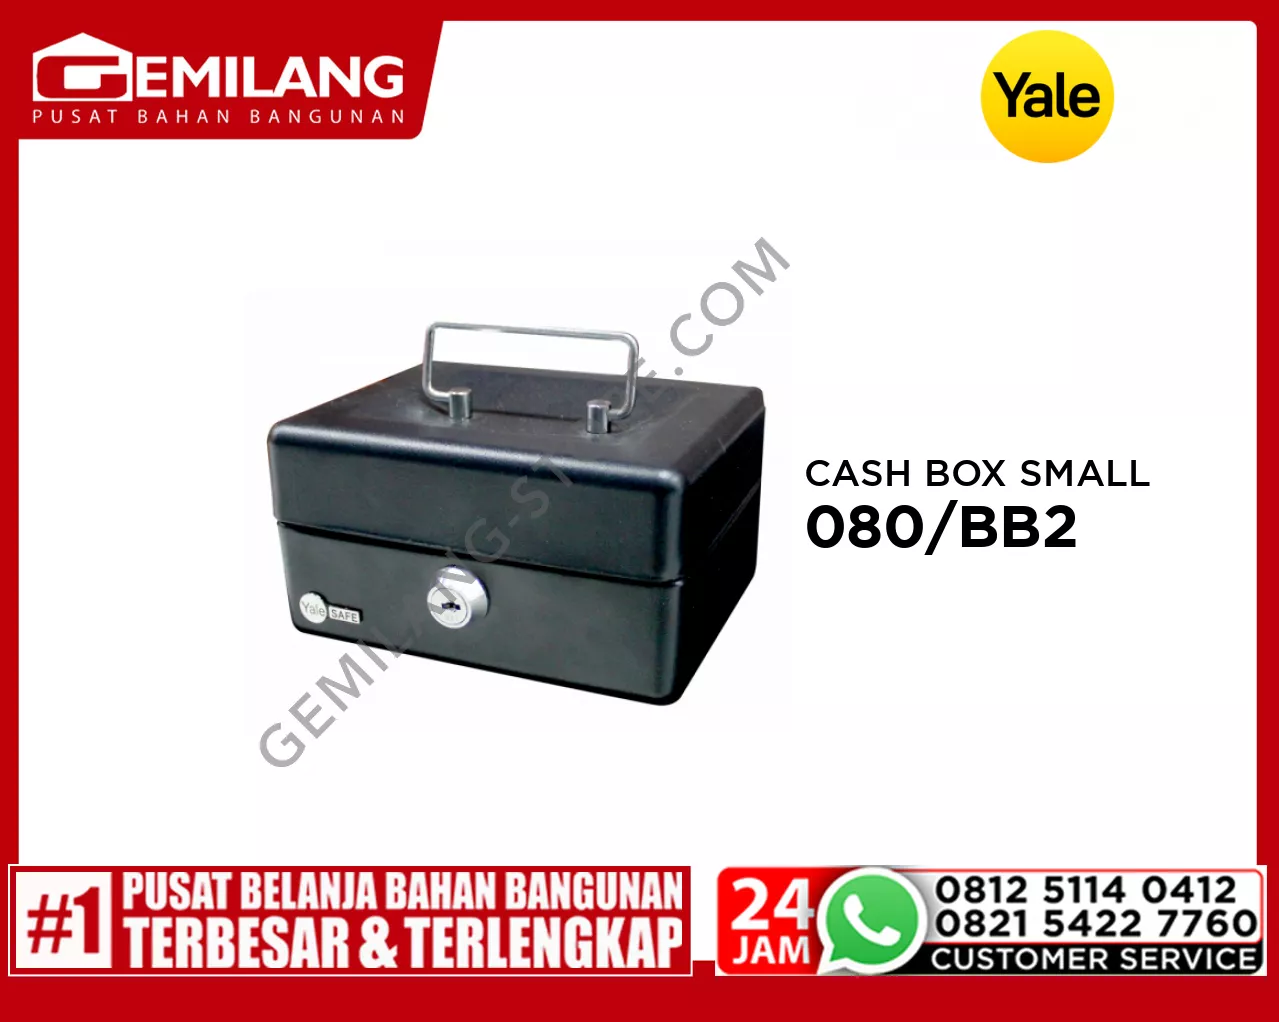 YALE CASH BOX SMALL YCB/080/BB2